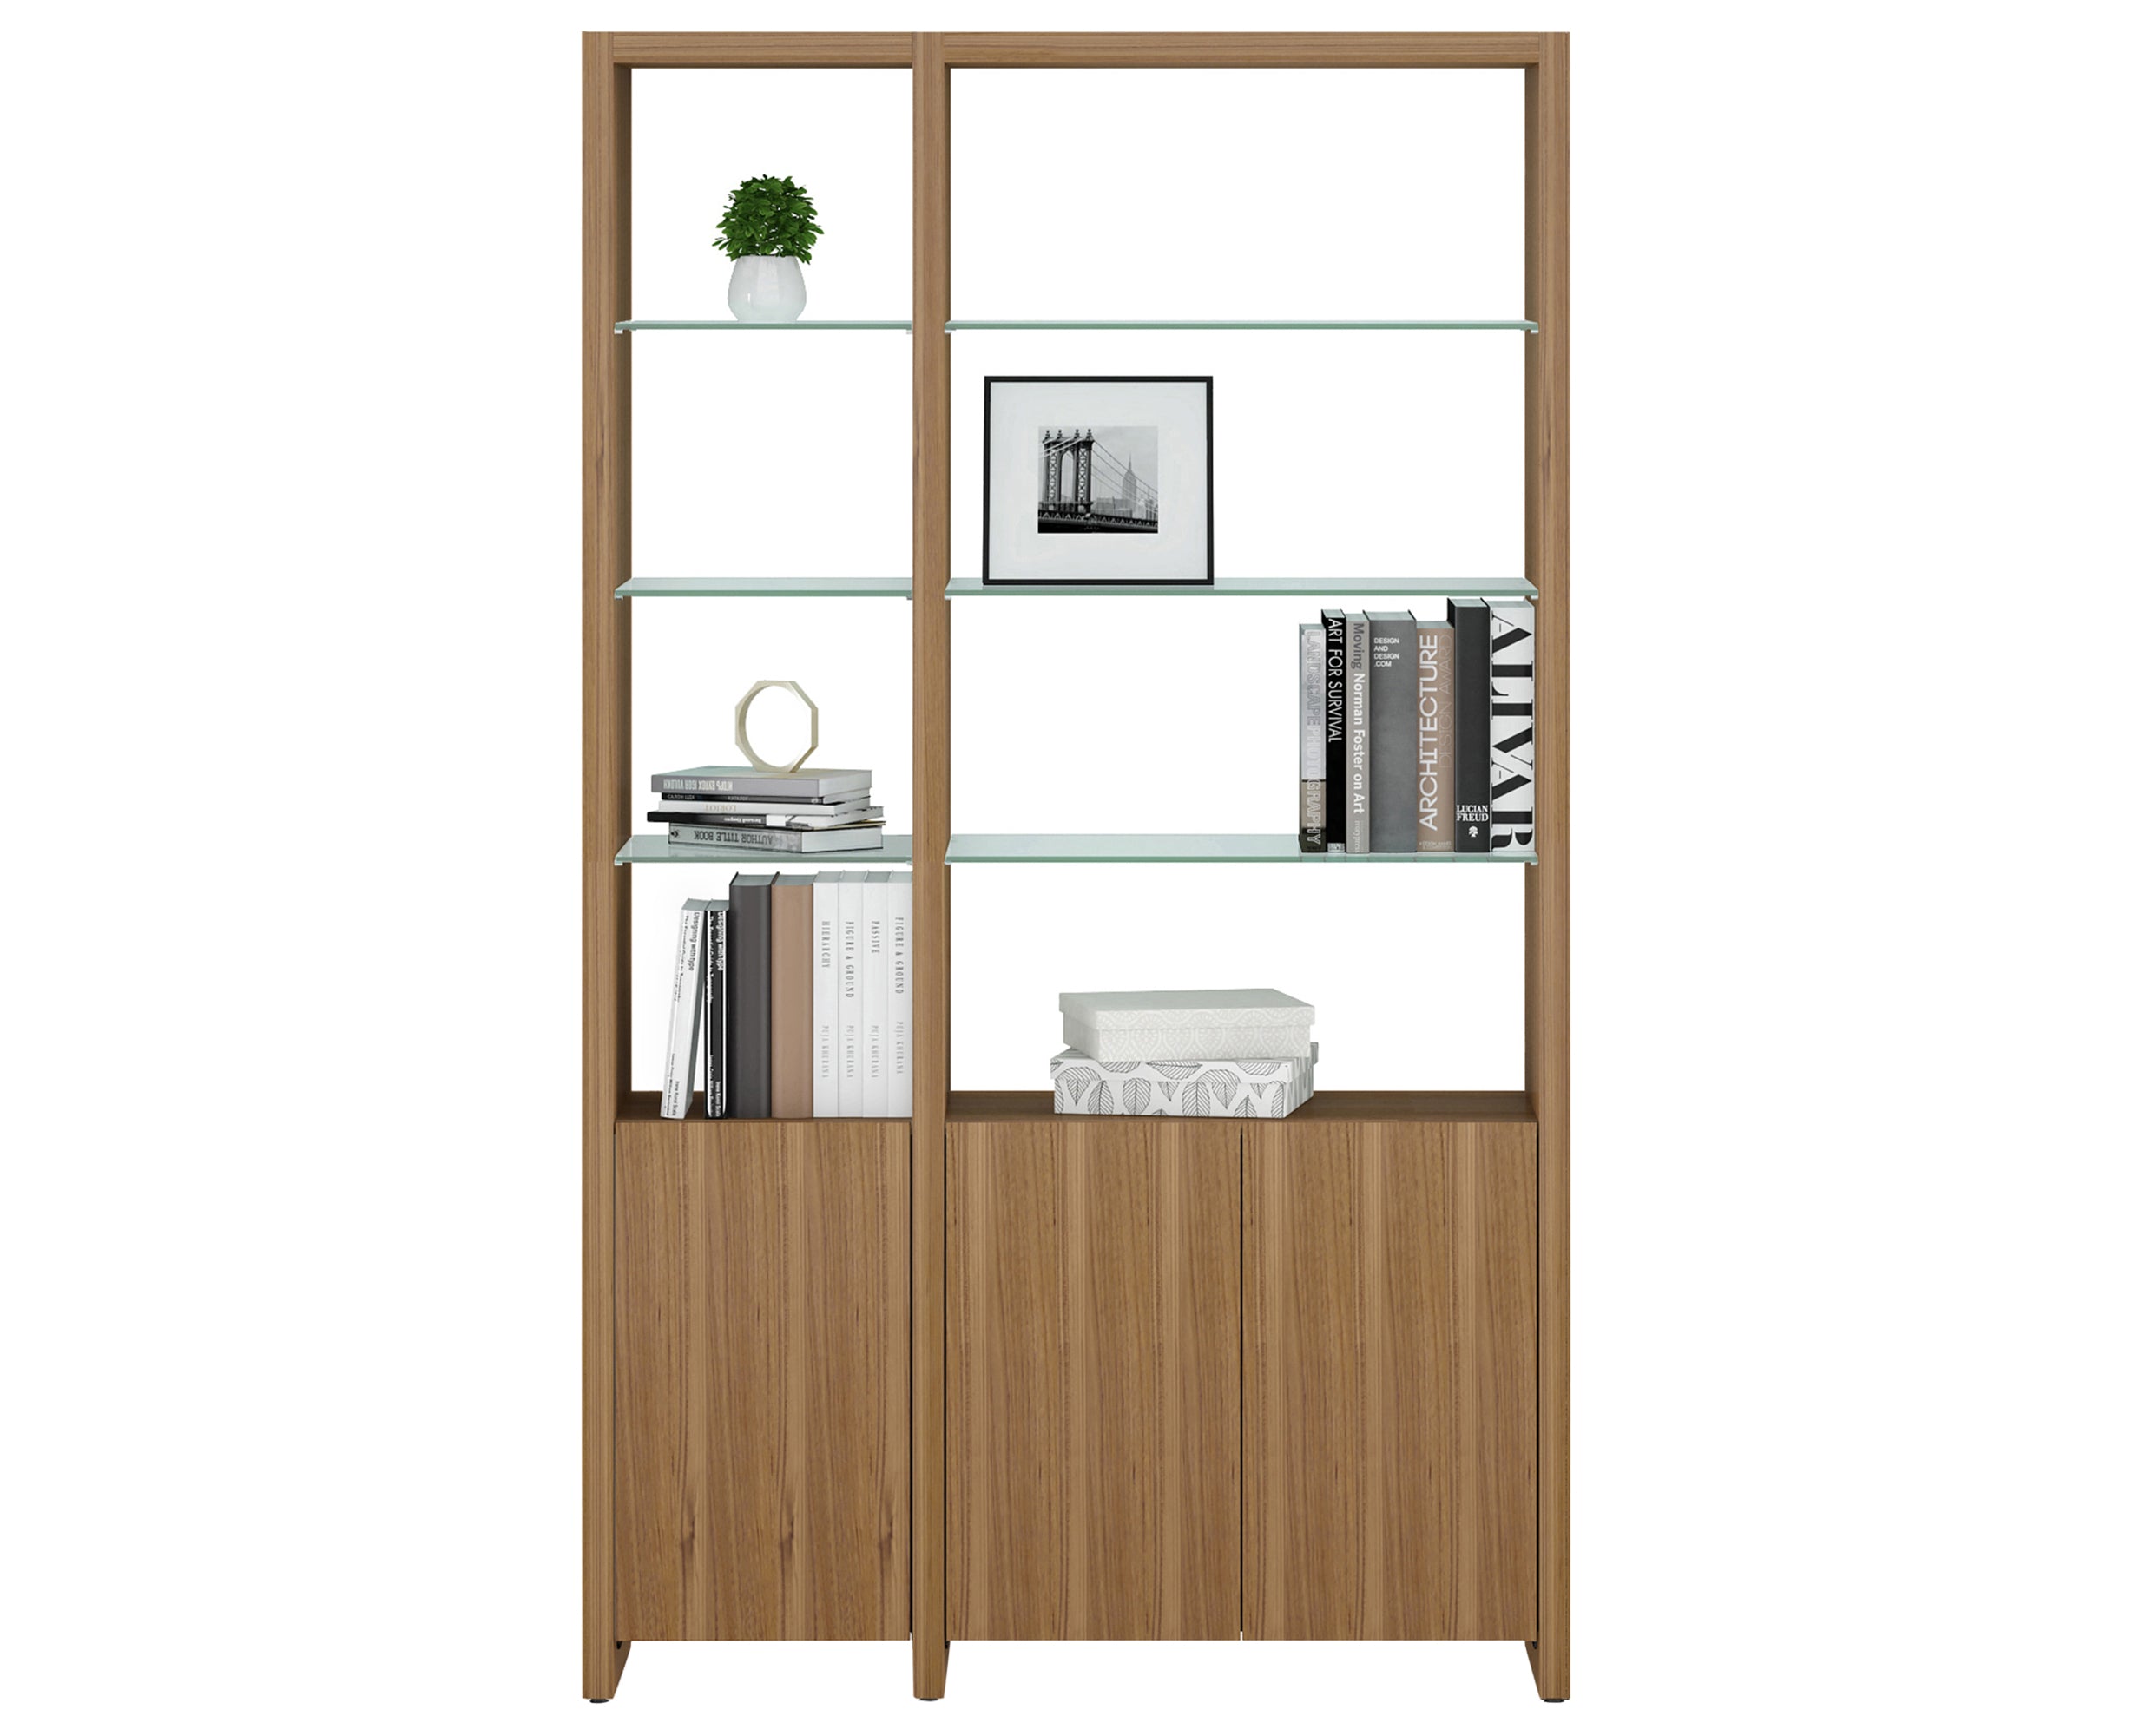 Natural Walnut Veneer & Polished Tempered Glass | BDI Linea 50" Shelf | Valley Ridge Furniture